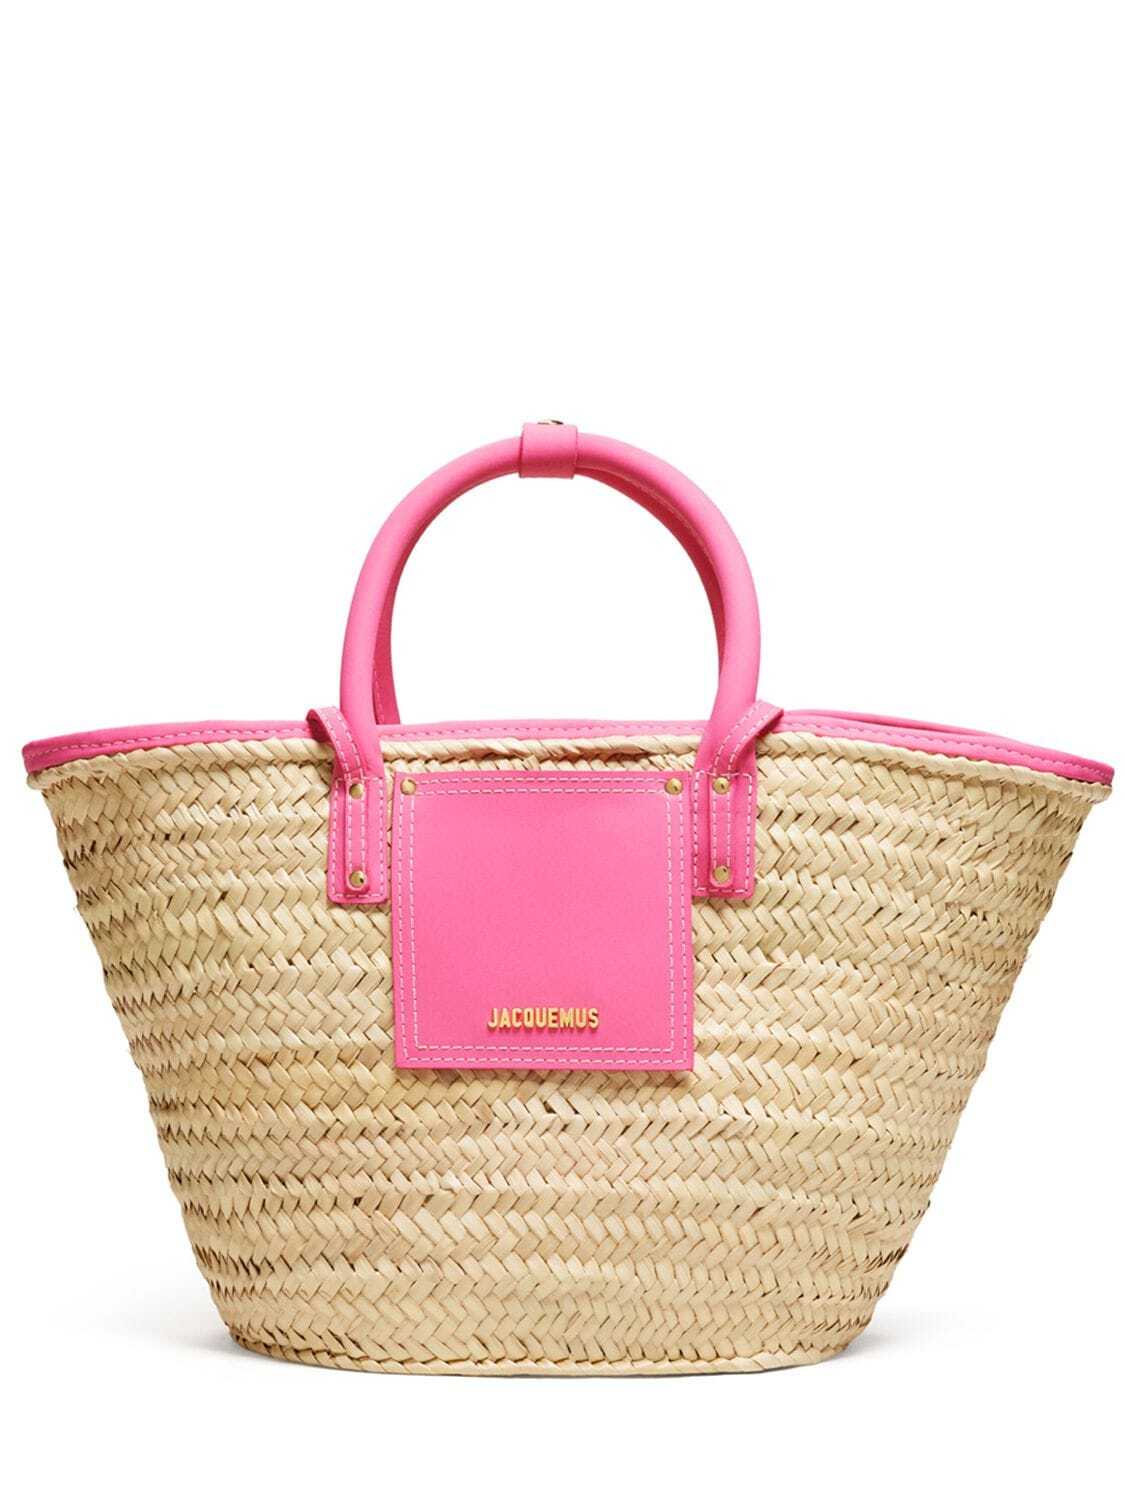 JACQUEMUS Le Panier Soli Tote Bag in pink